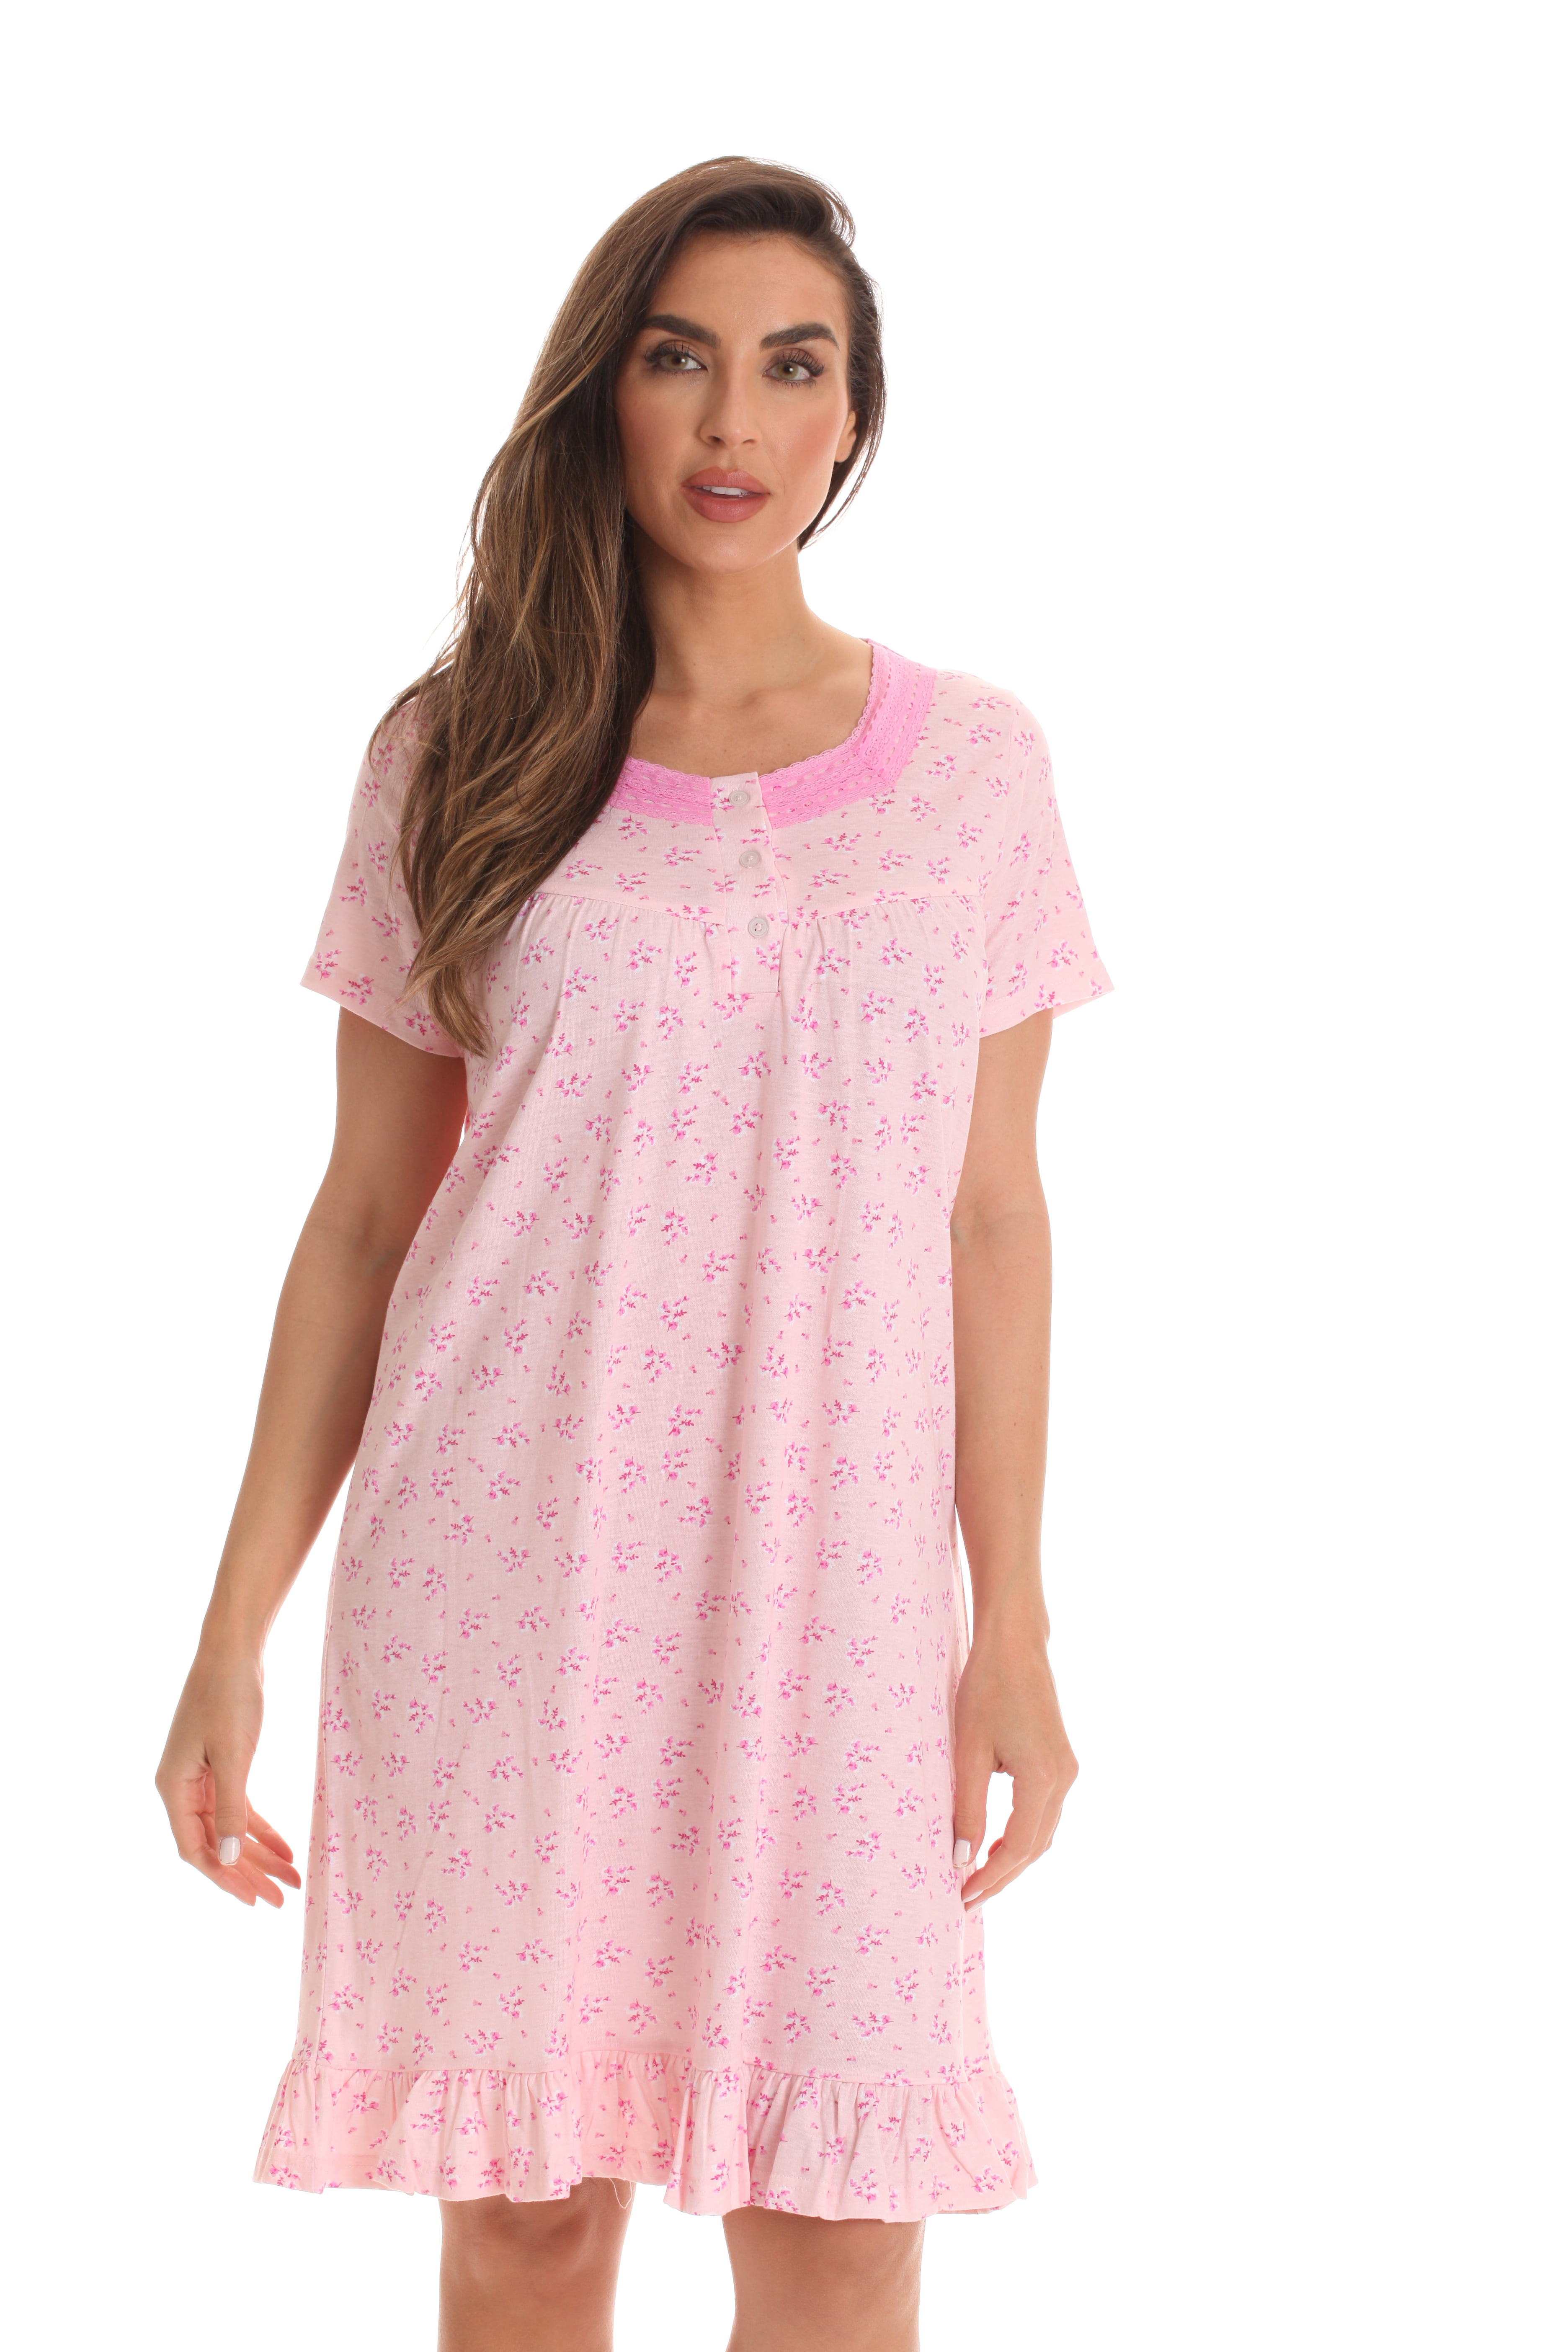 Short sleeve cotton nightgown